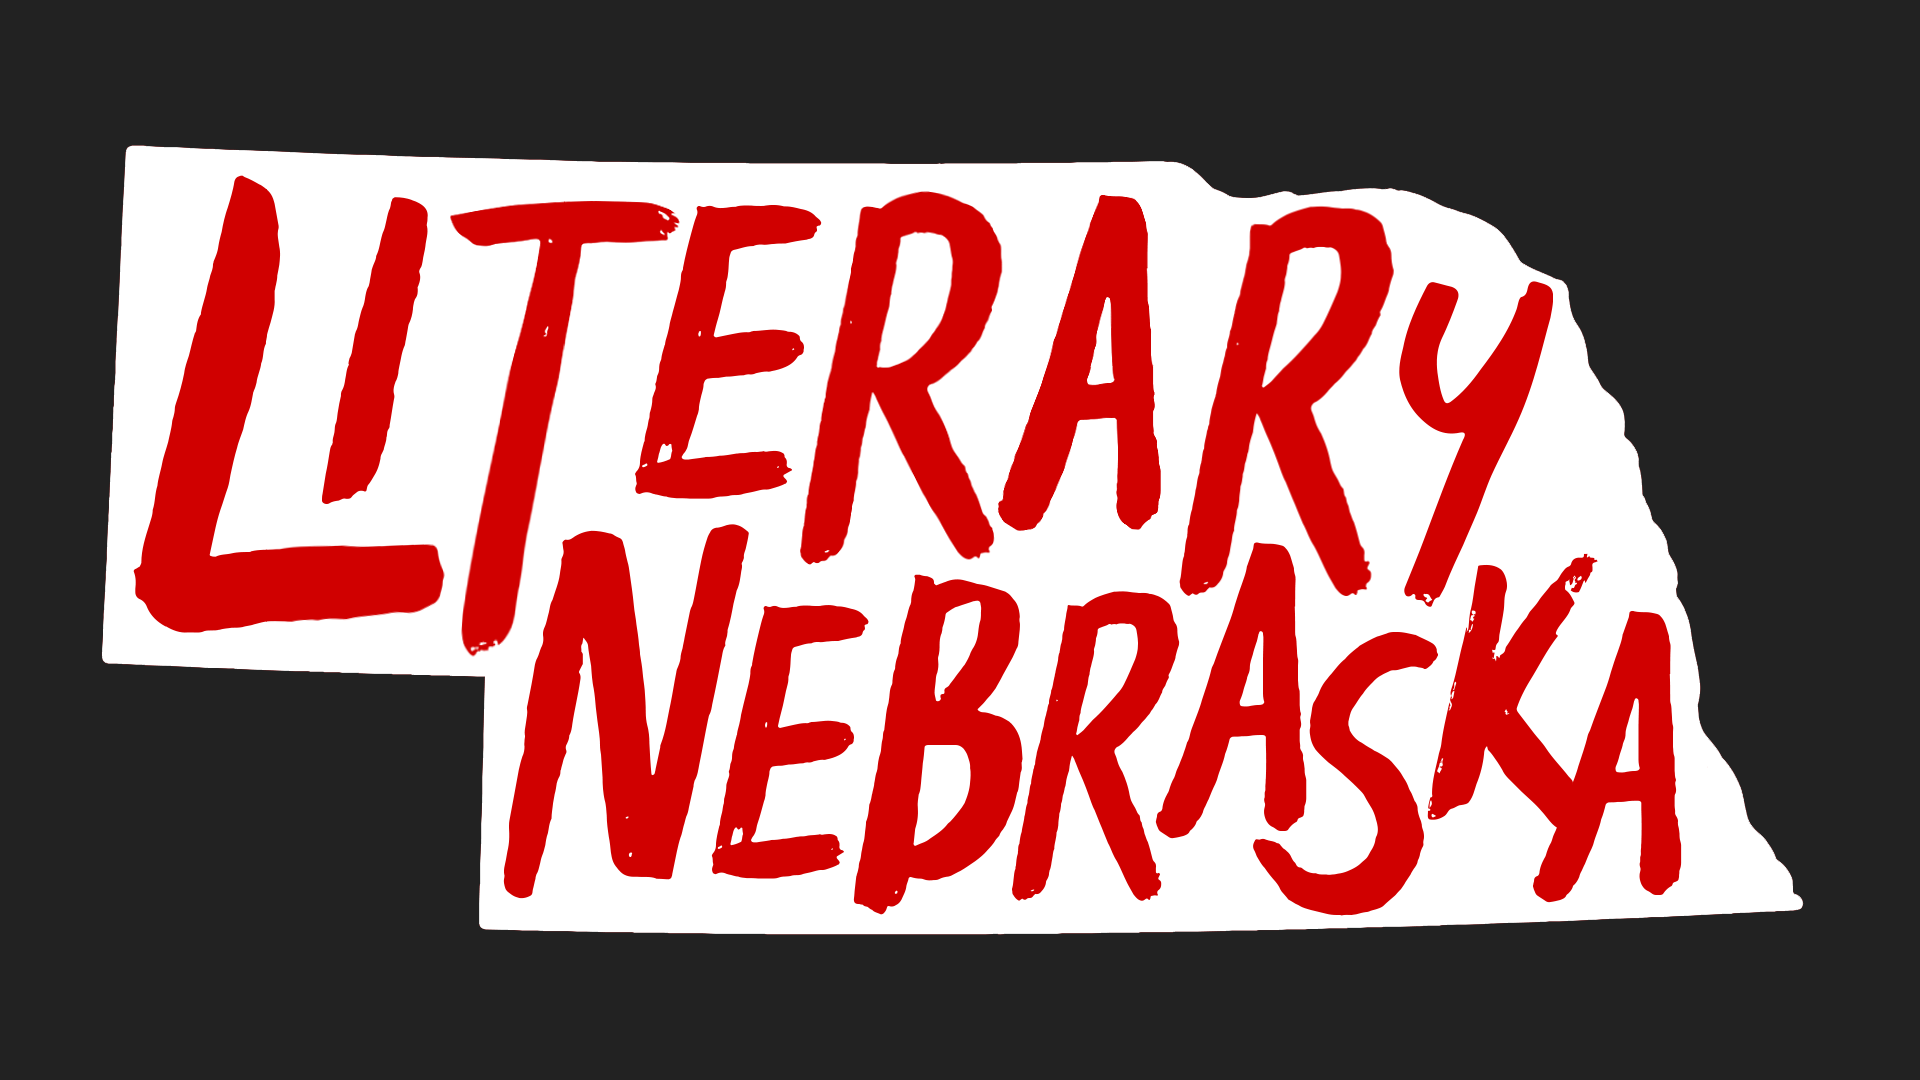 Literary Nebraska